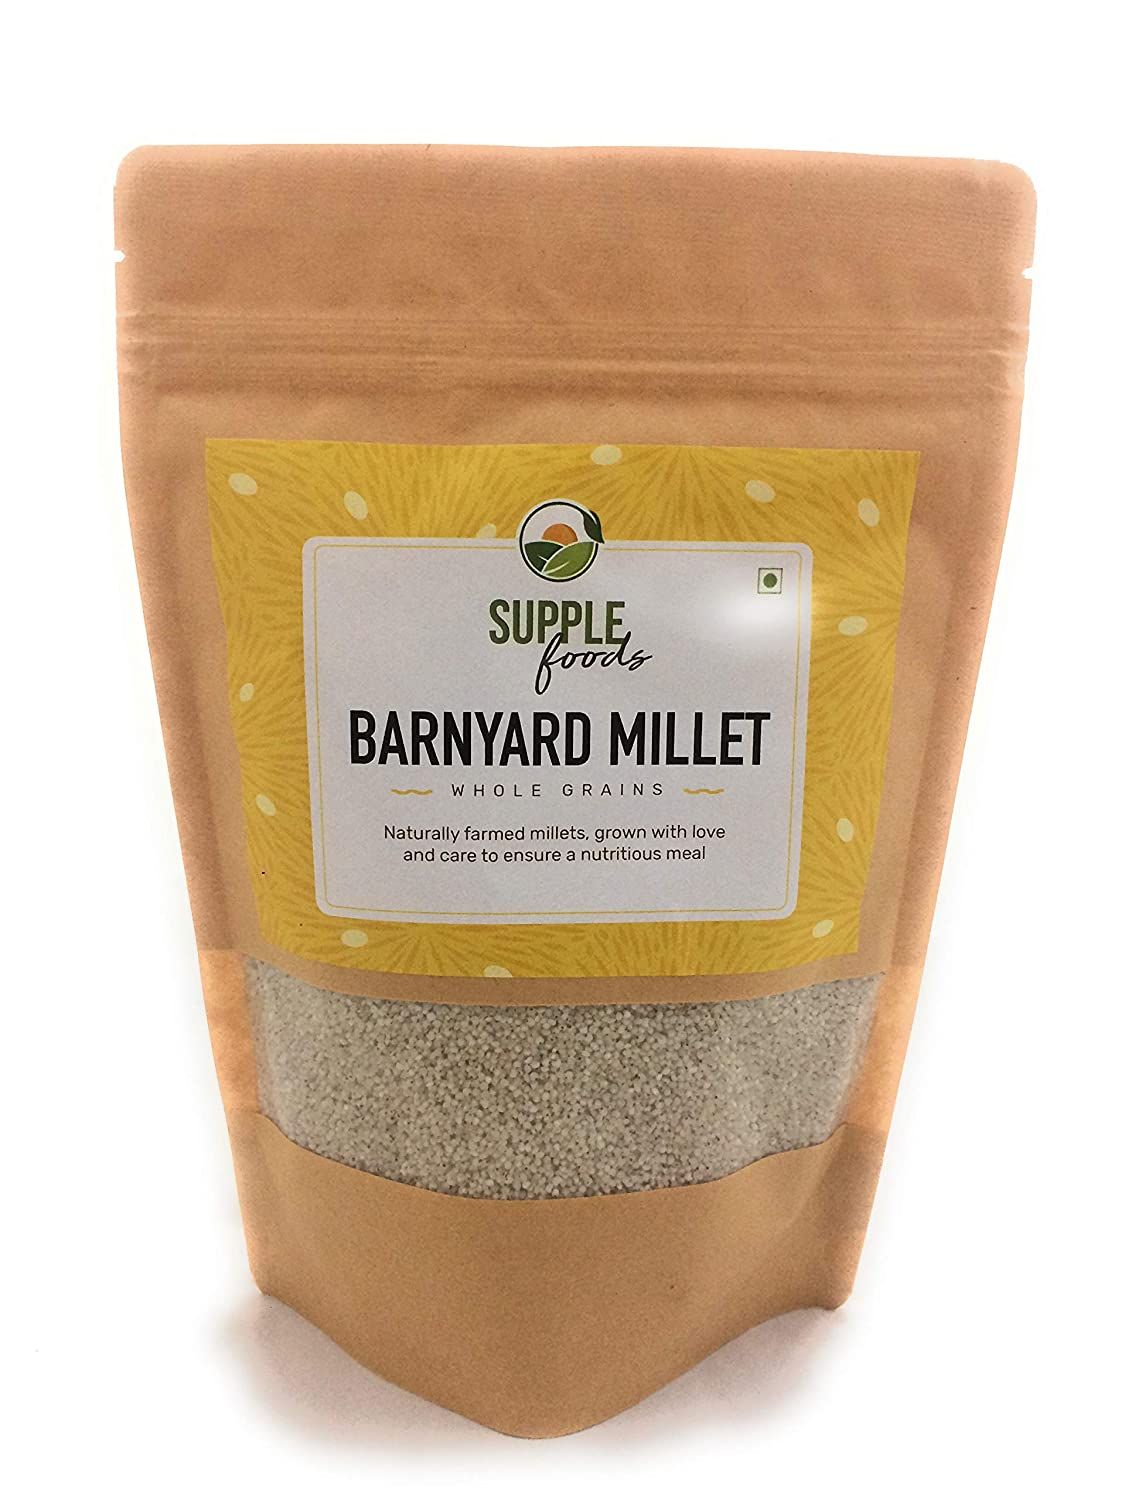 SUPPLE foods Barnyard Millet Image